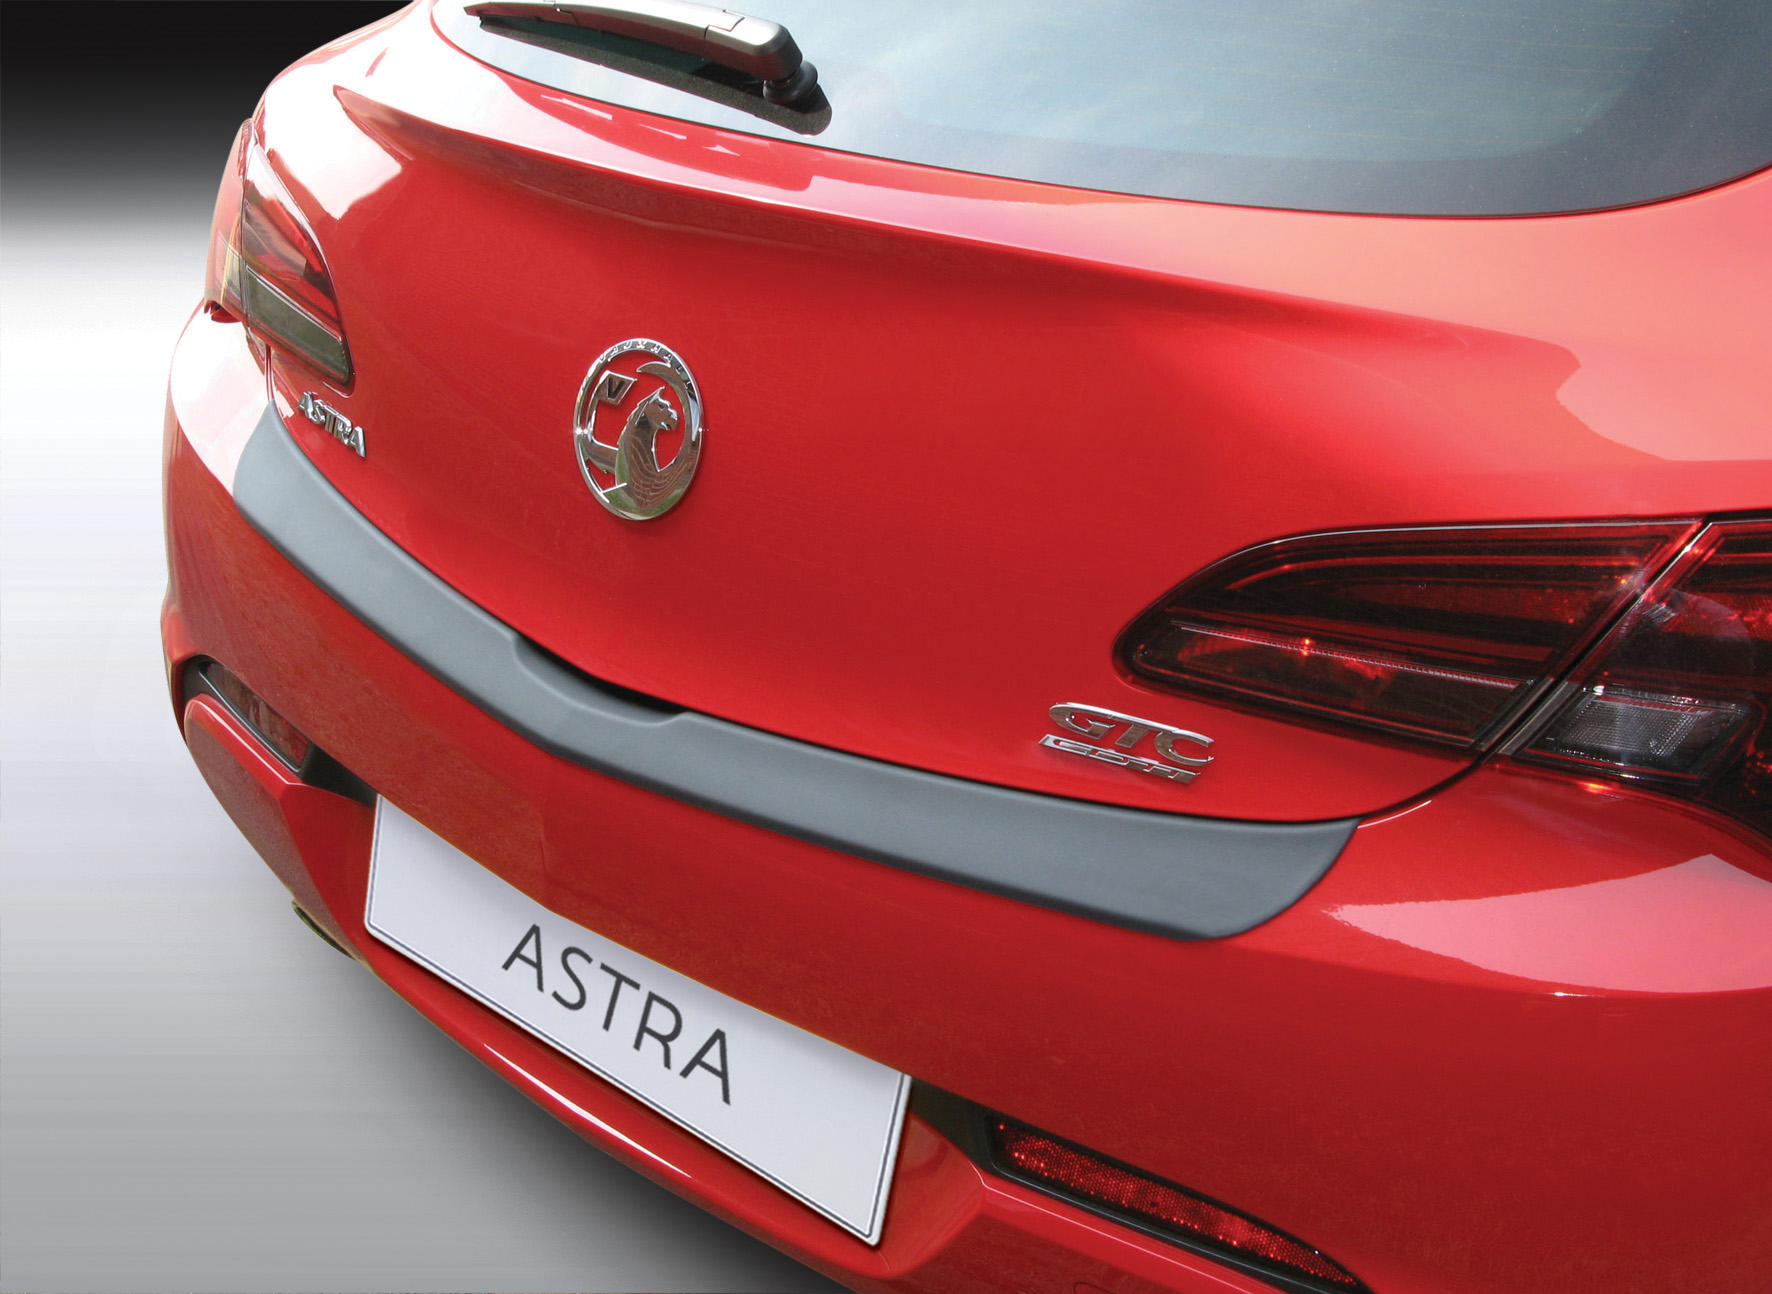 Takapuskurin kolhusuoja Opel Astra GTC 3d 1/2012-